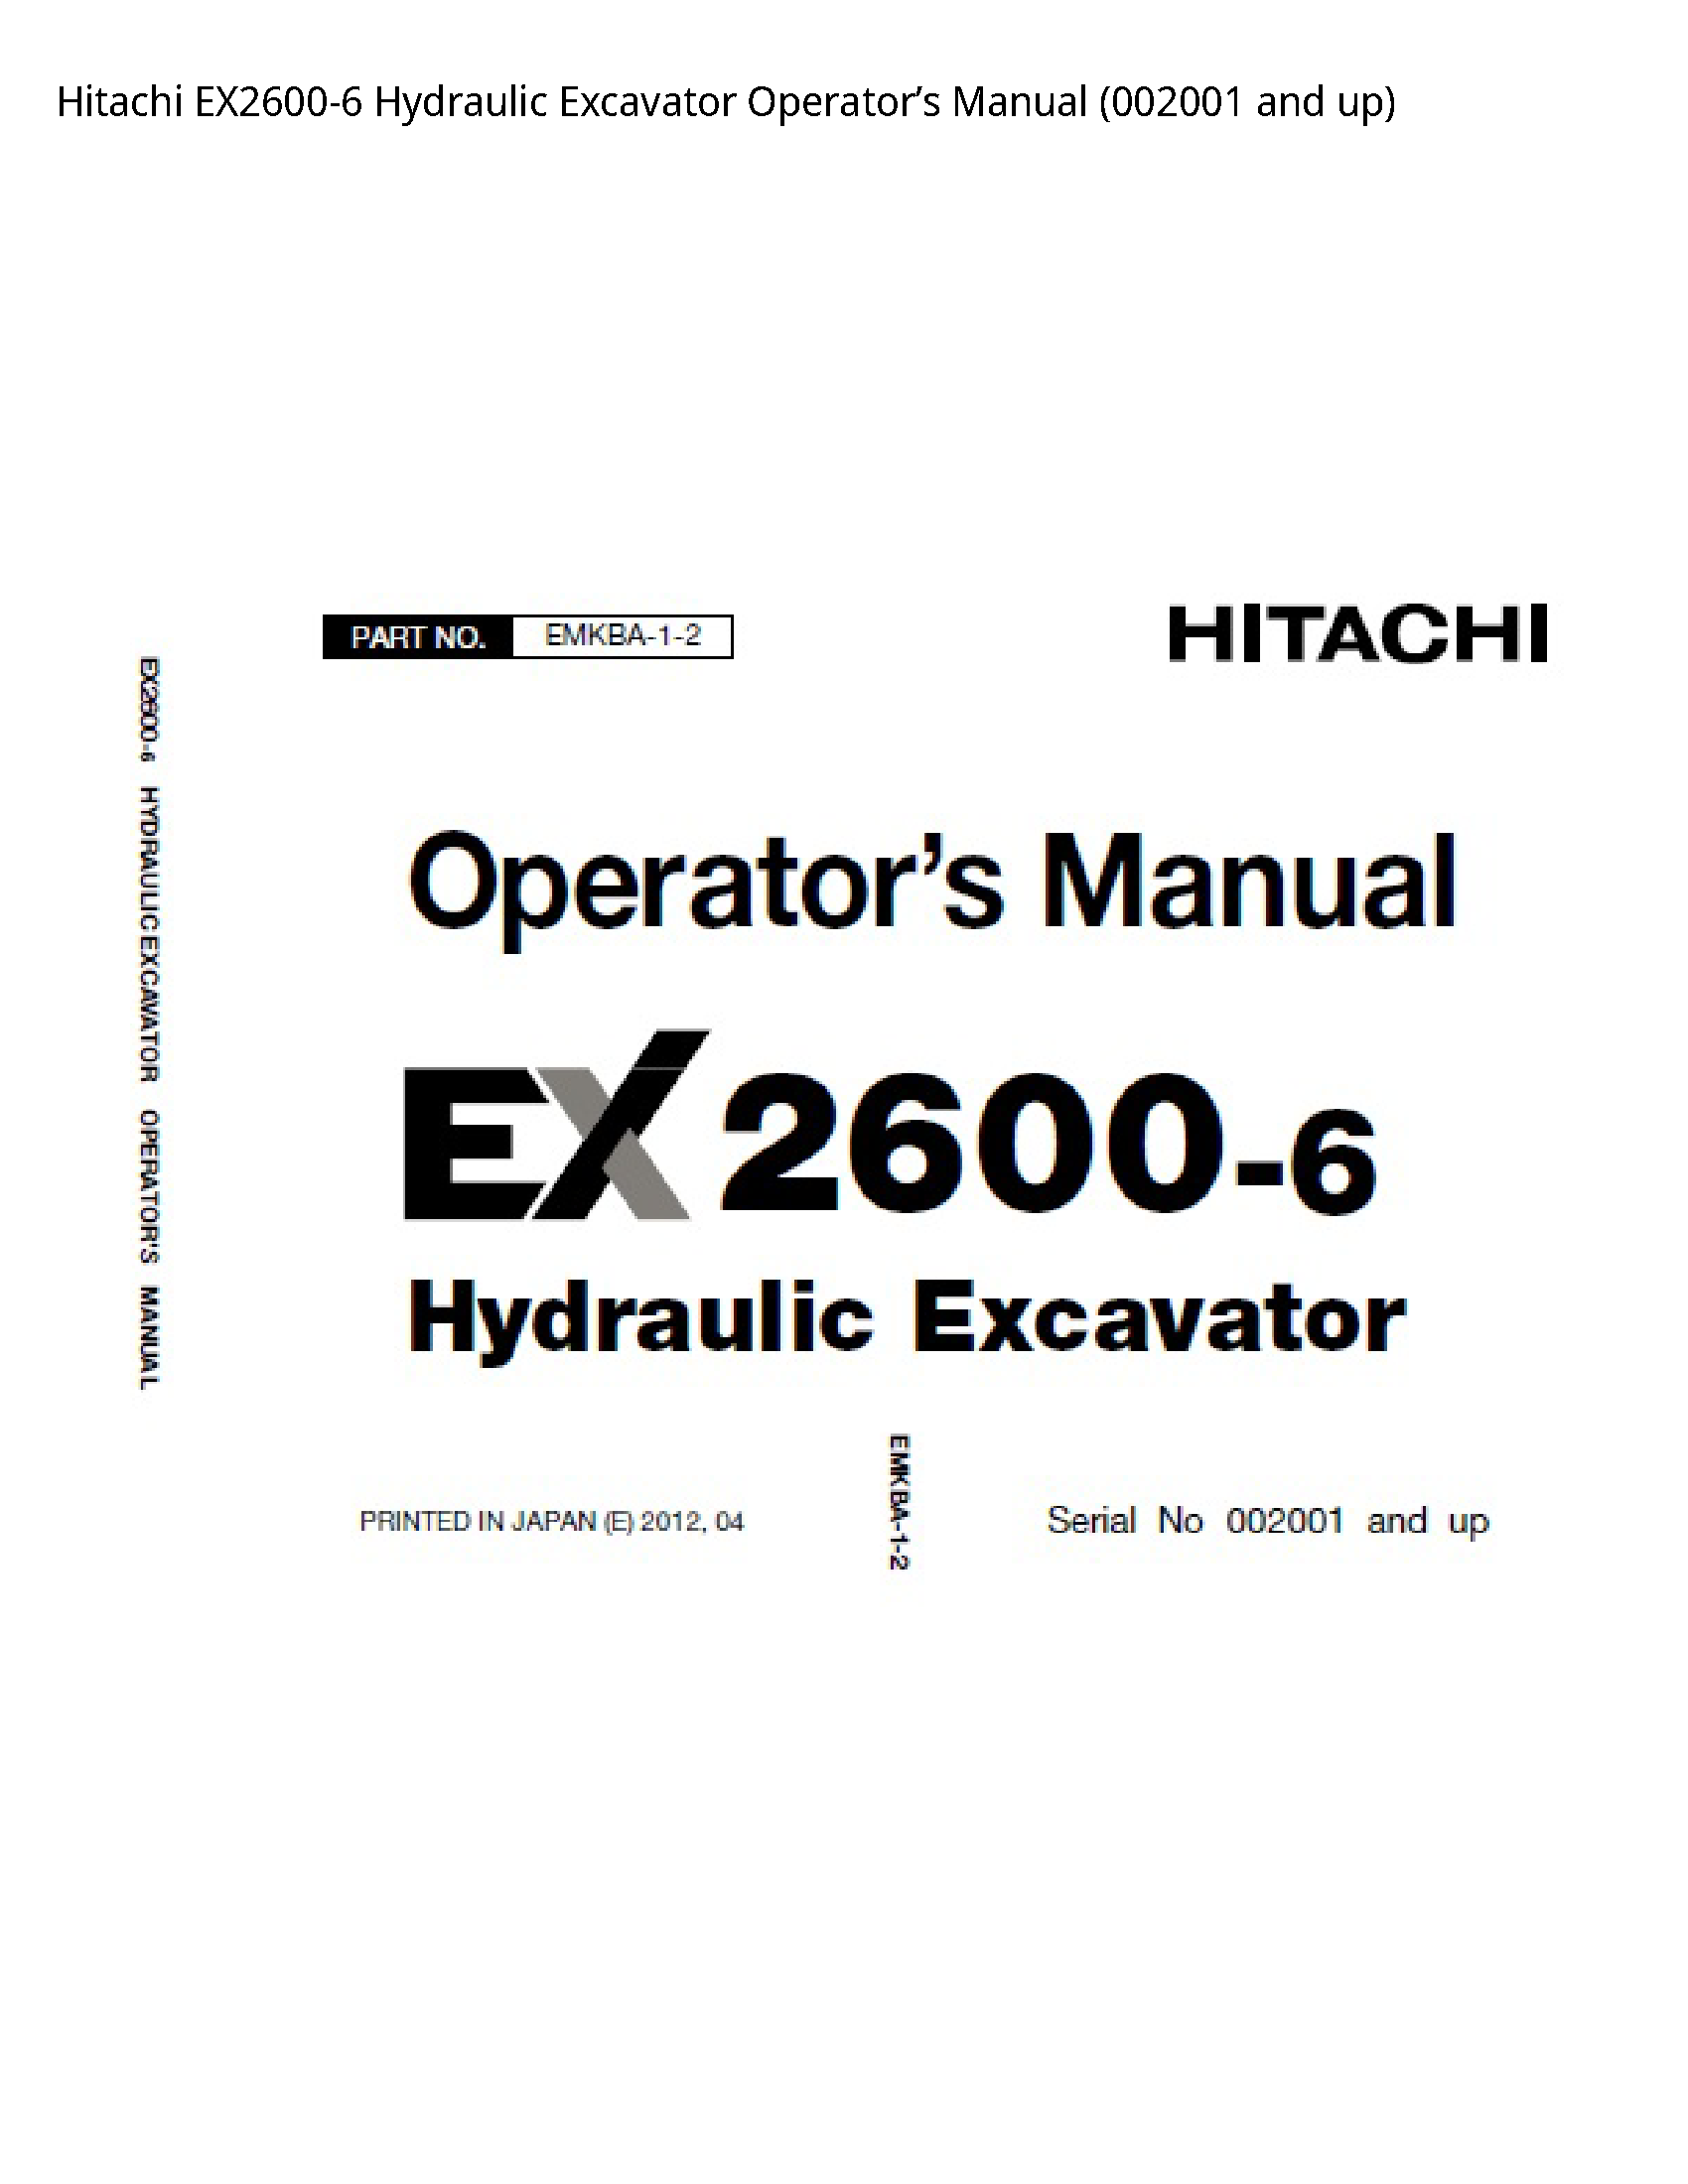 Hitachi EX2600-6 Hydraulic Excavator Operator’s manual